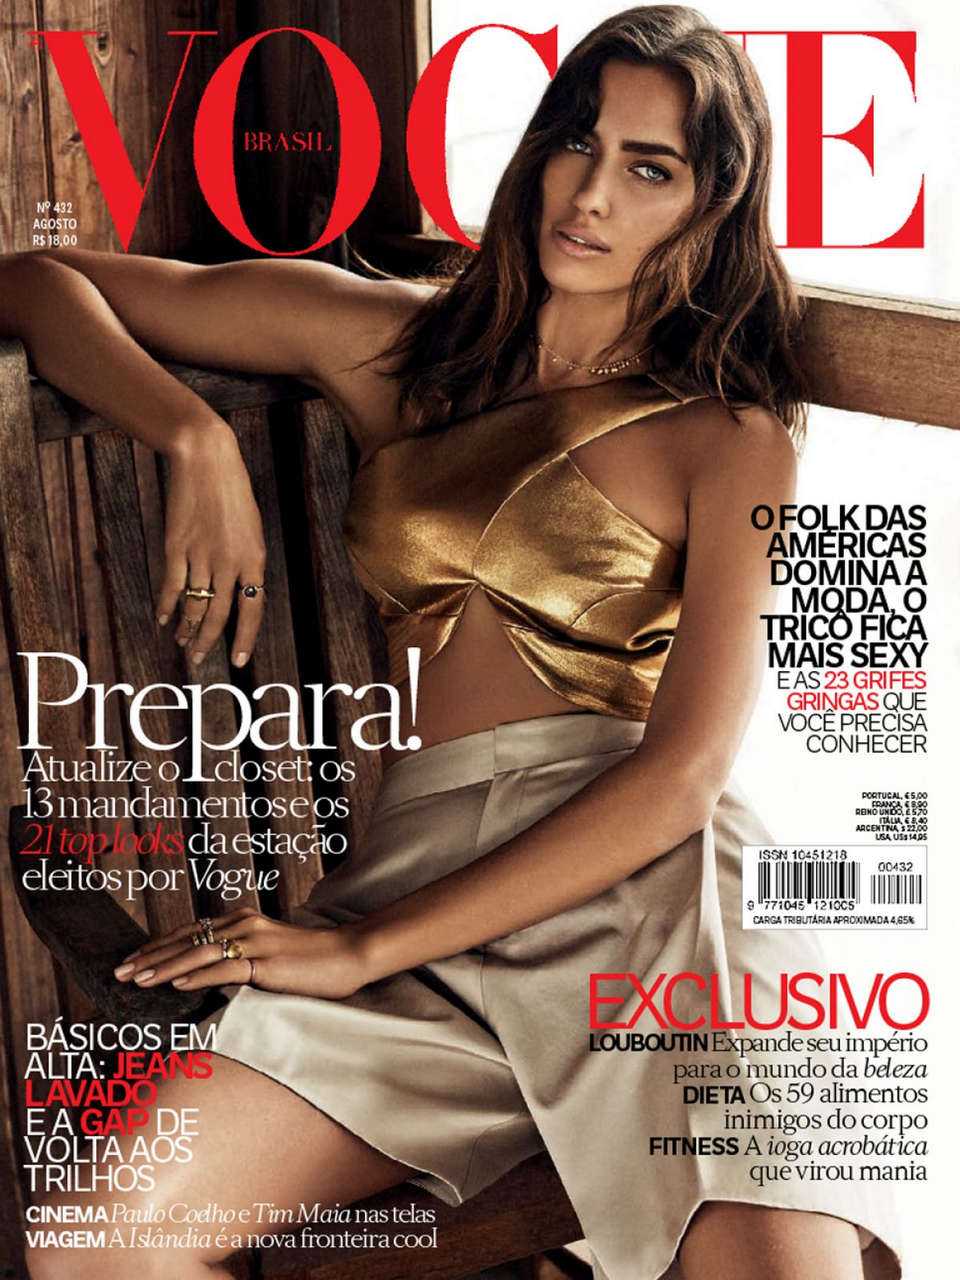 Irina Shayk Vogue Magazine Brazil August 2014 Issue